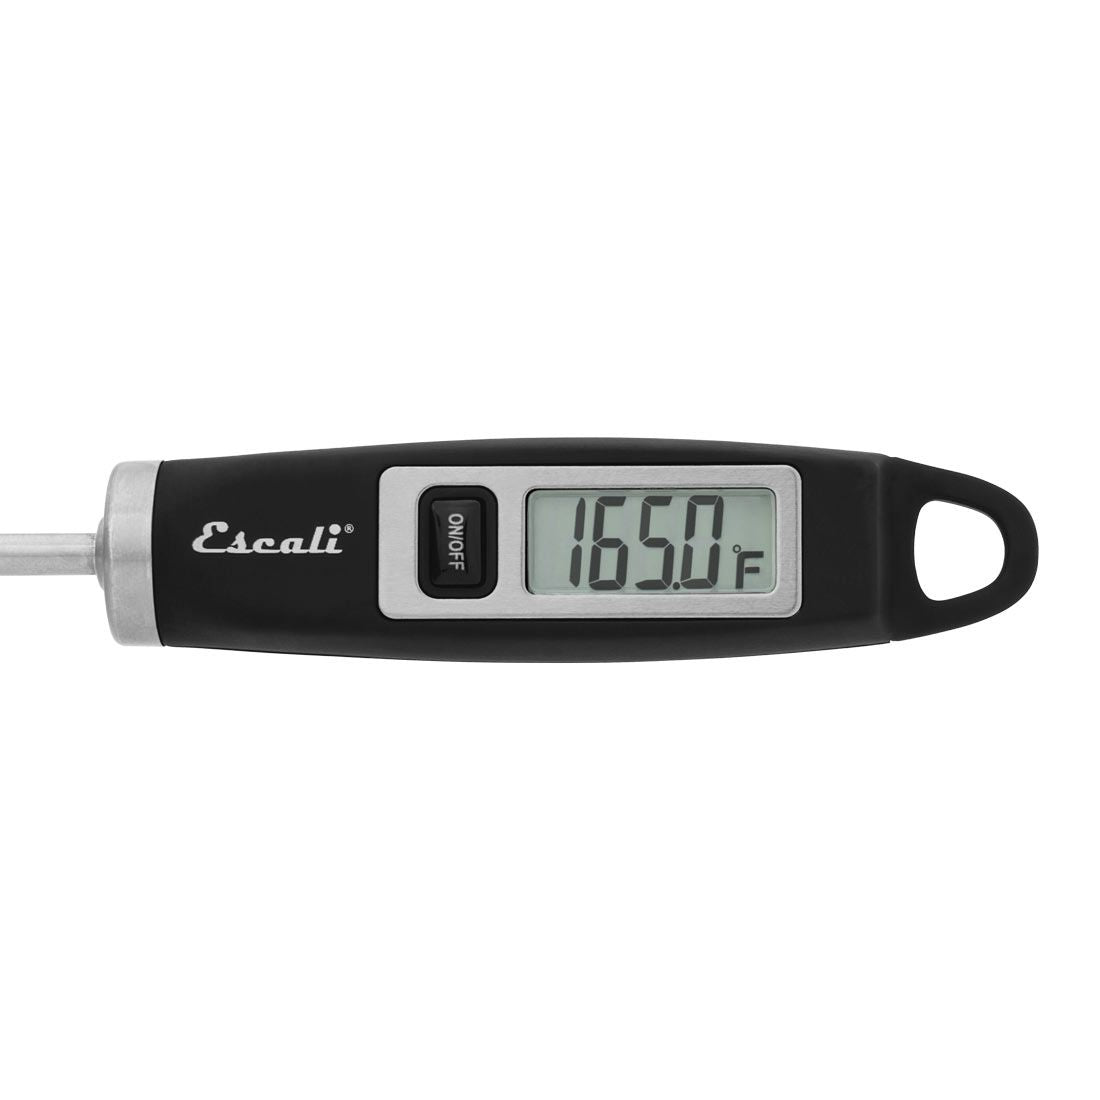 Escali "Gourmet" digital thermometer